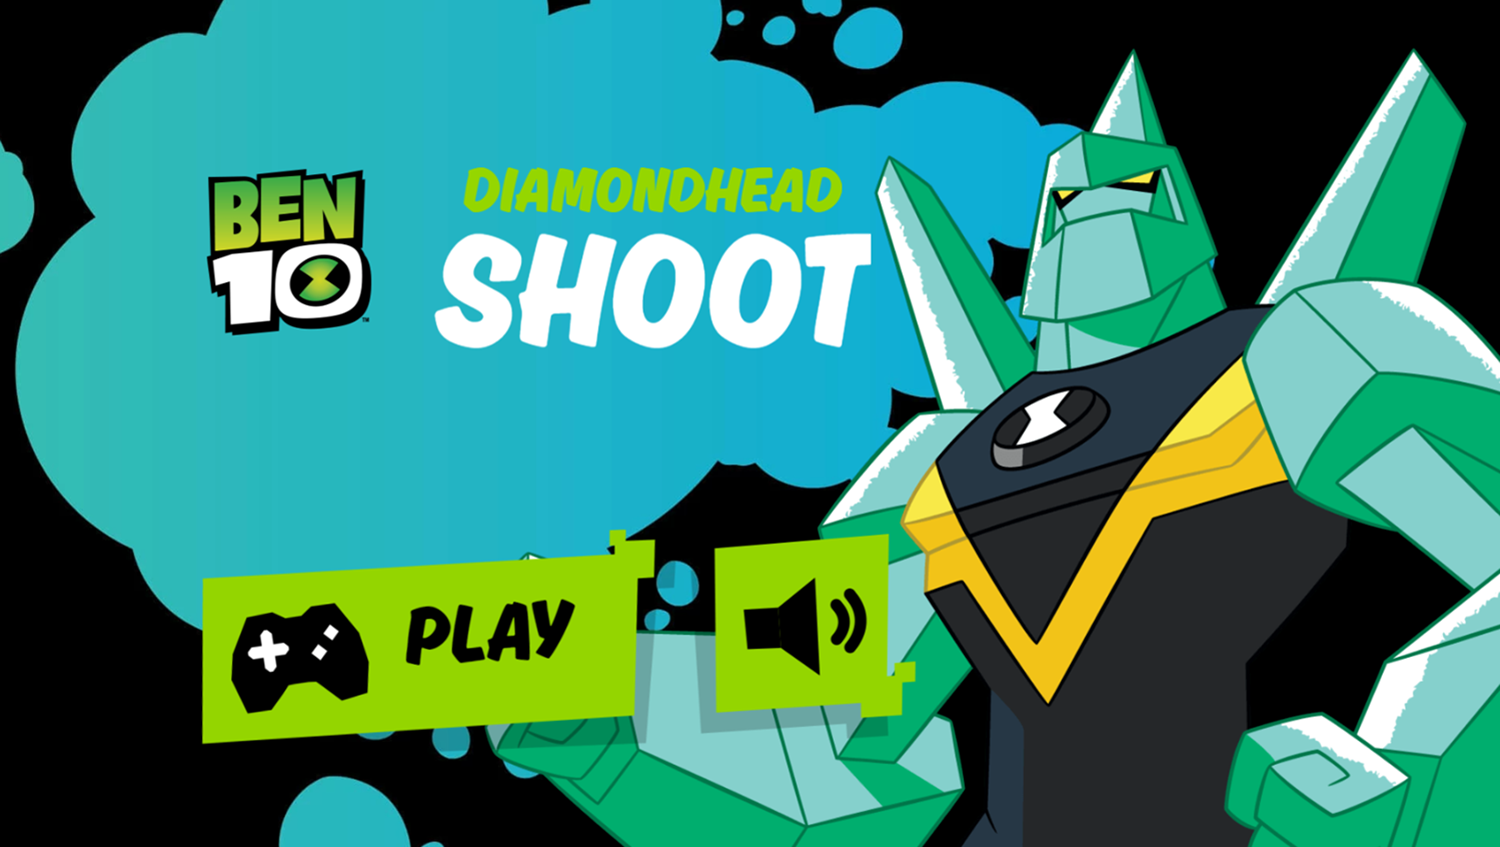 Ben 10 Diamonhead Shoot Game Welcome Screen Screenshot.